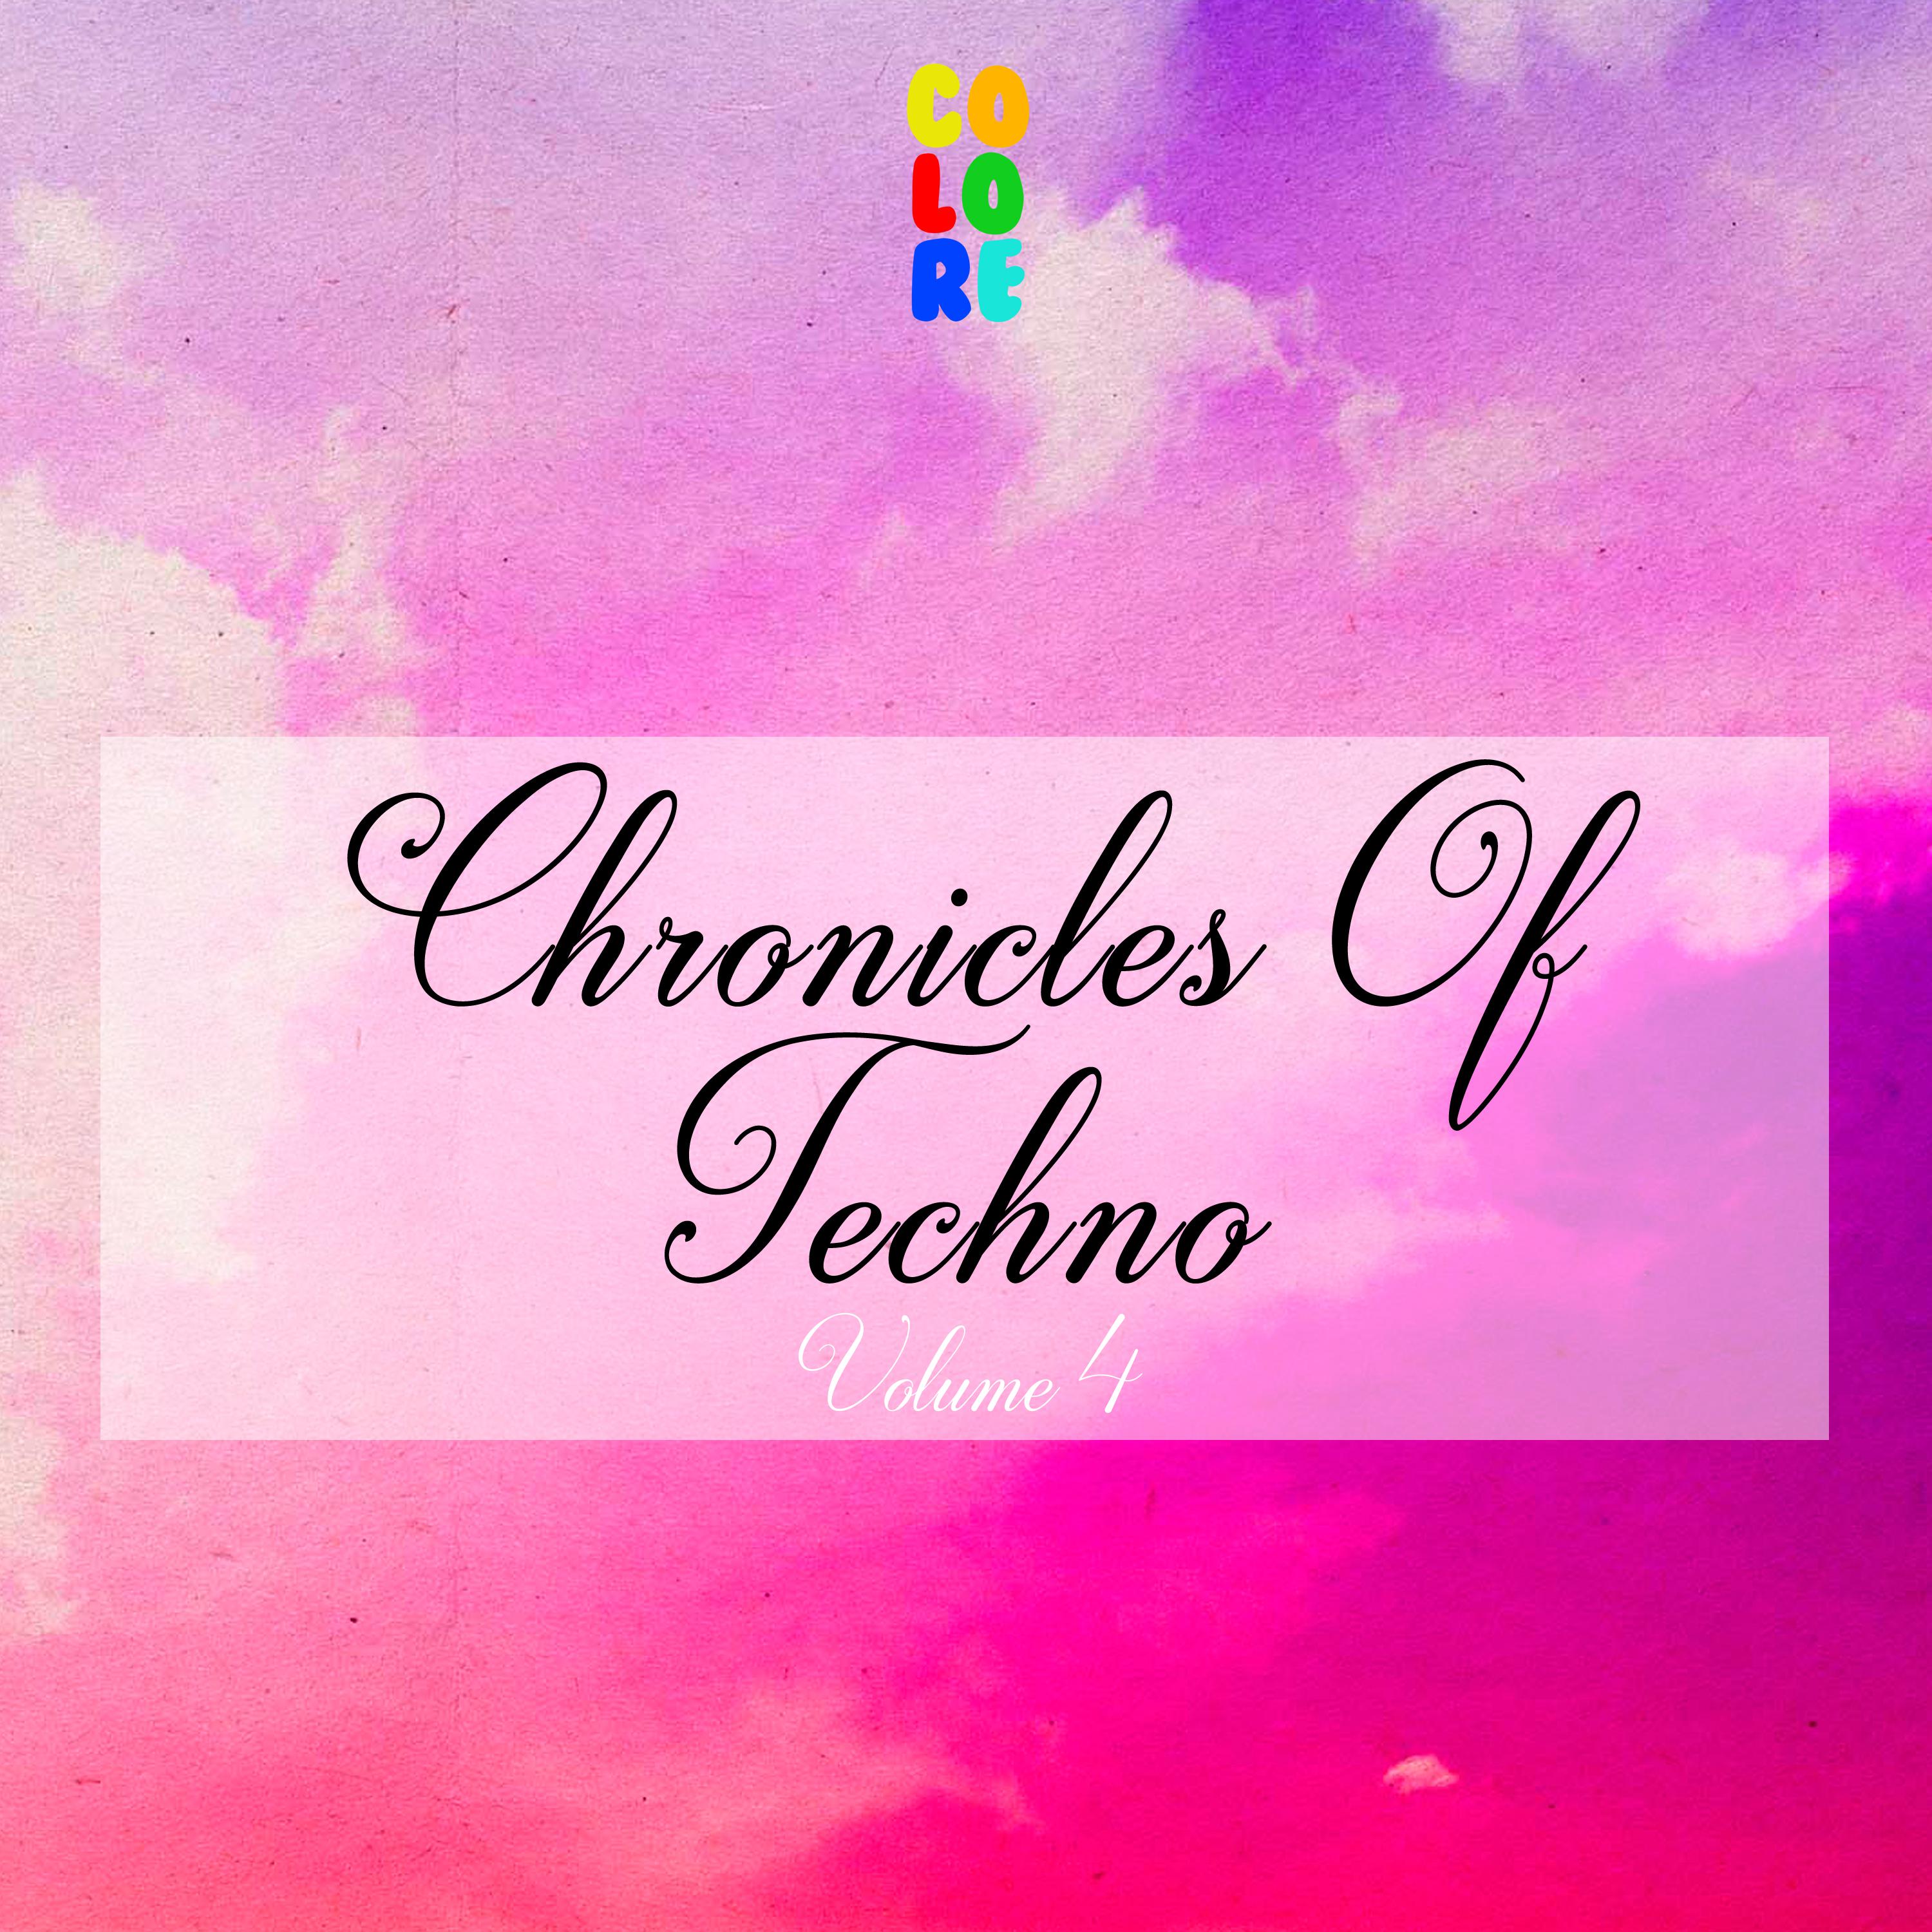 Chronicles of Techno, Vol. 4